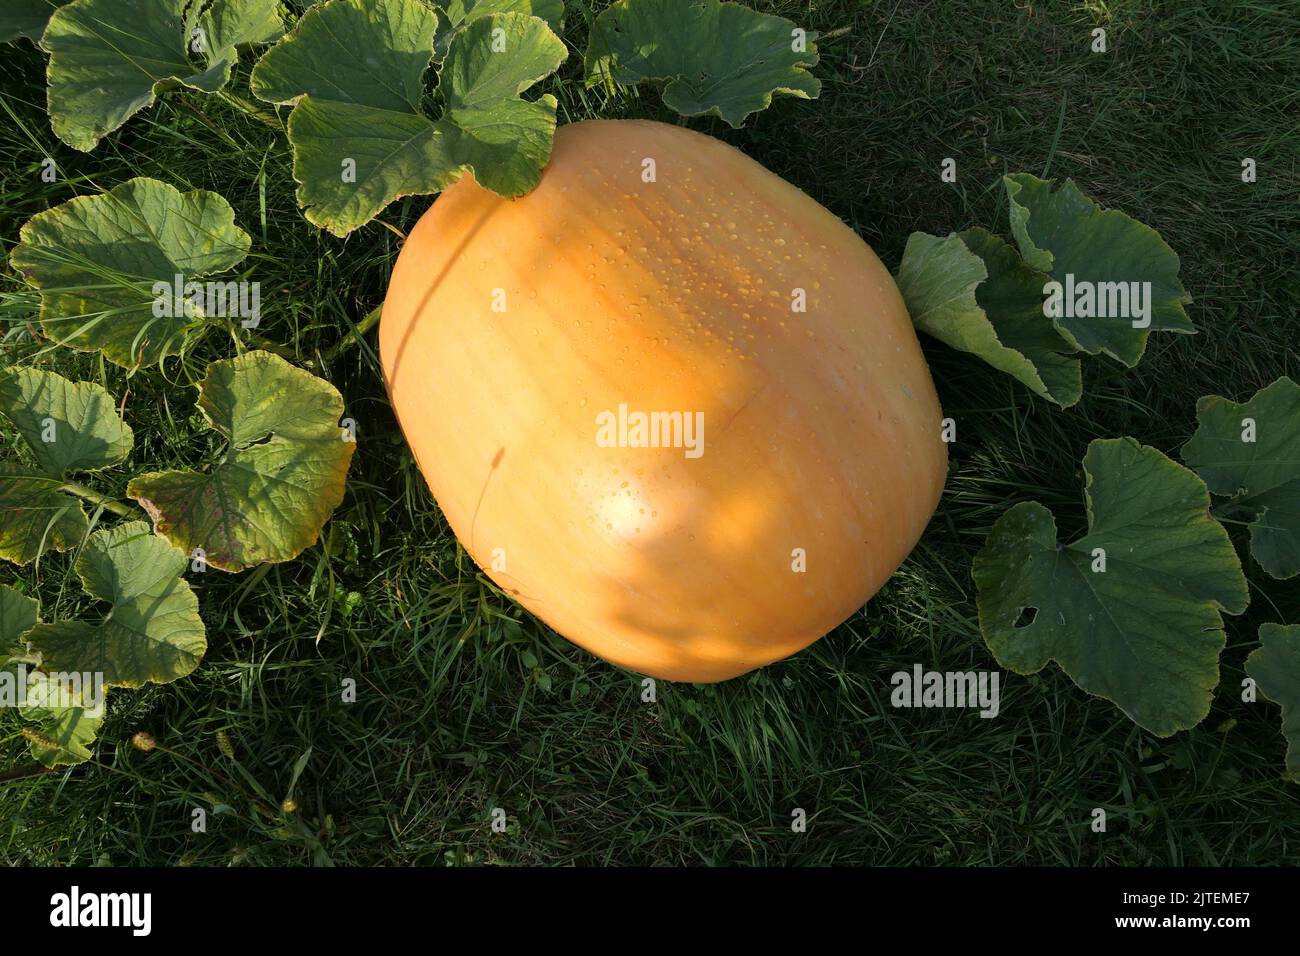 Atlantic Giant pumpkin growing on plant in the garden Stock Photo